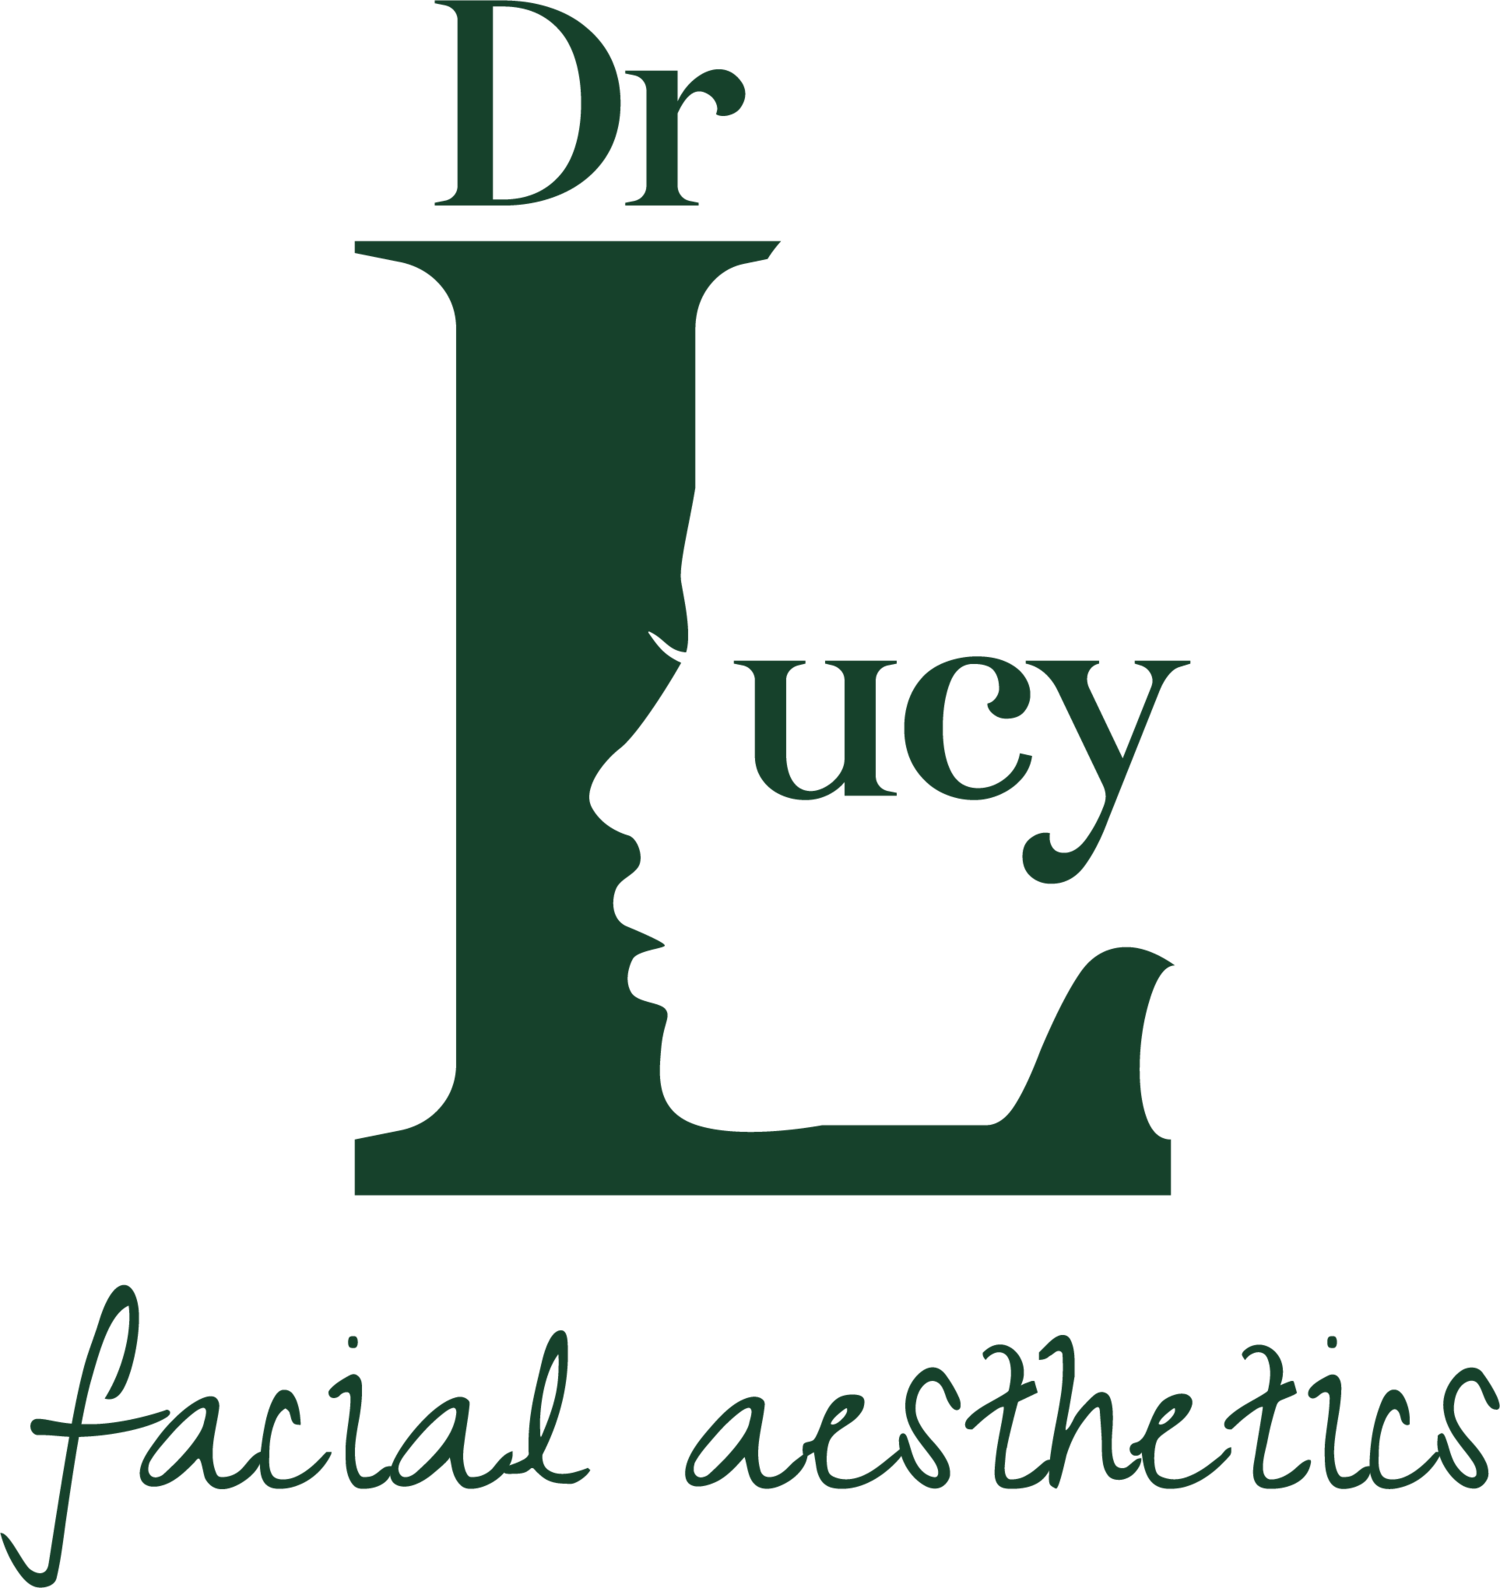 Dr Lucy Facial Aesthetics